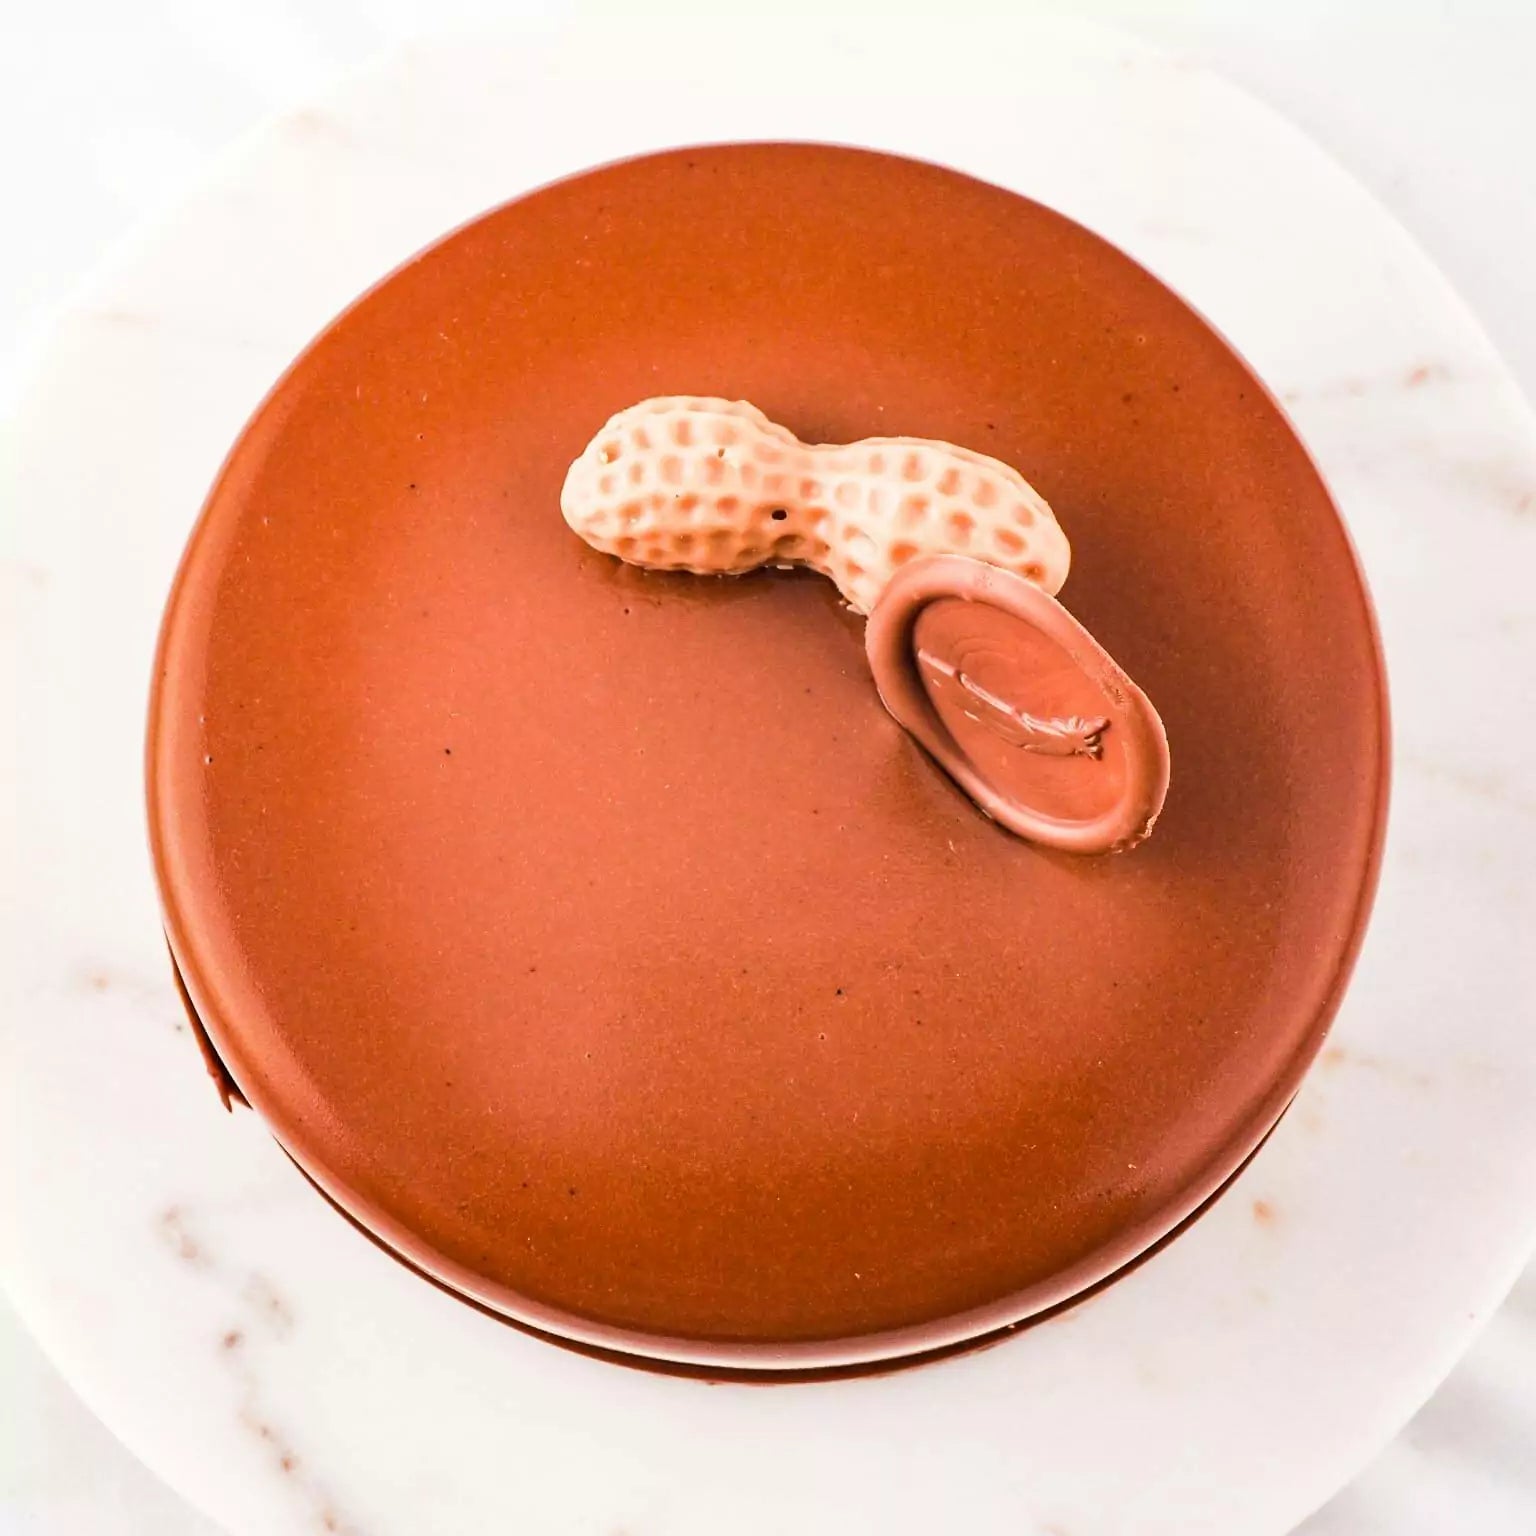 Sjokolade og nøtter / Chocolate and nuts